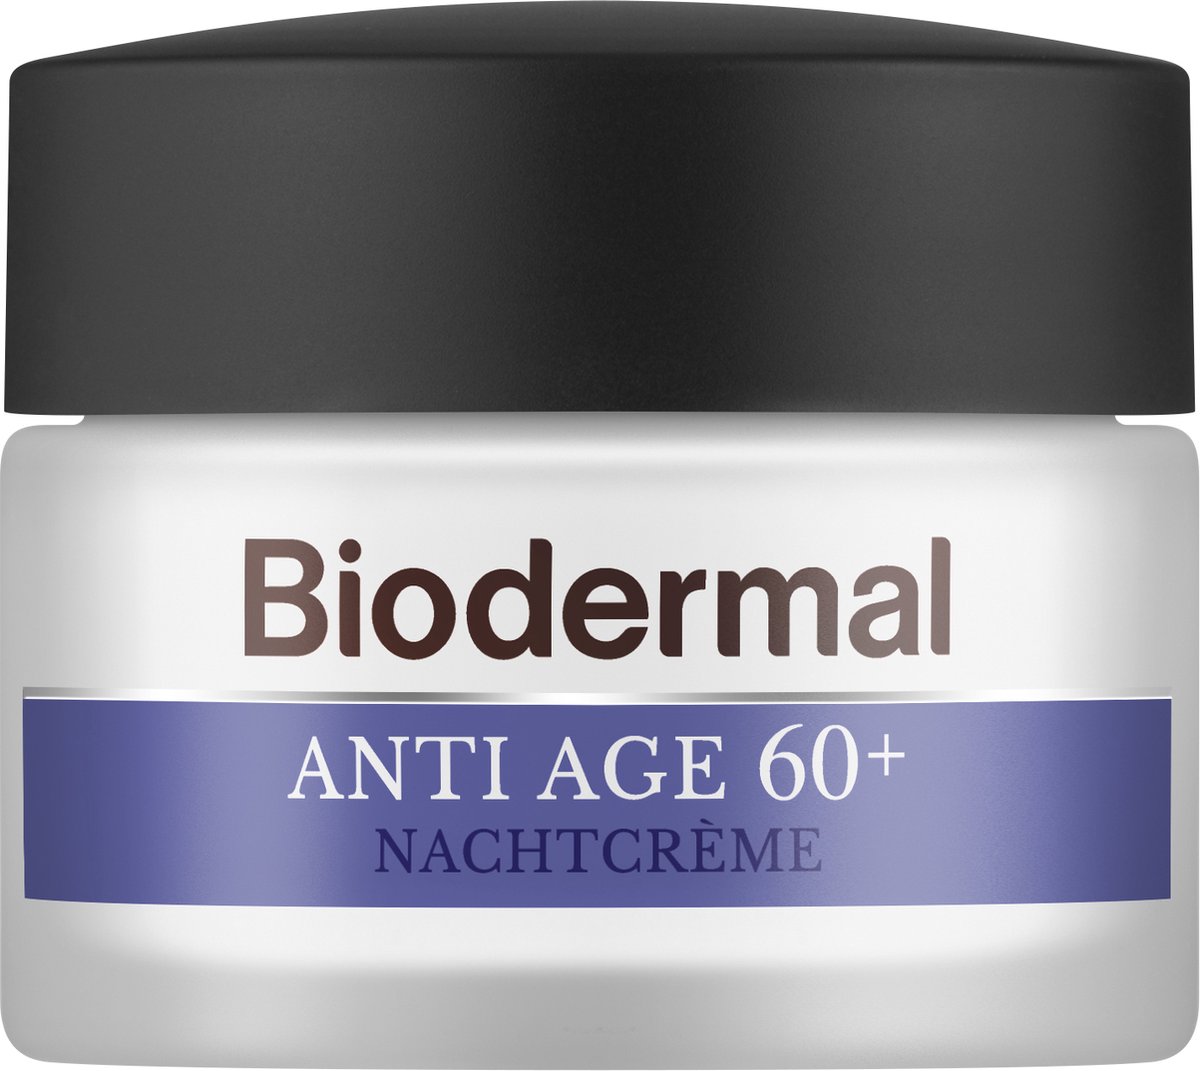 Biodermal Anti Age 60+